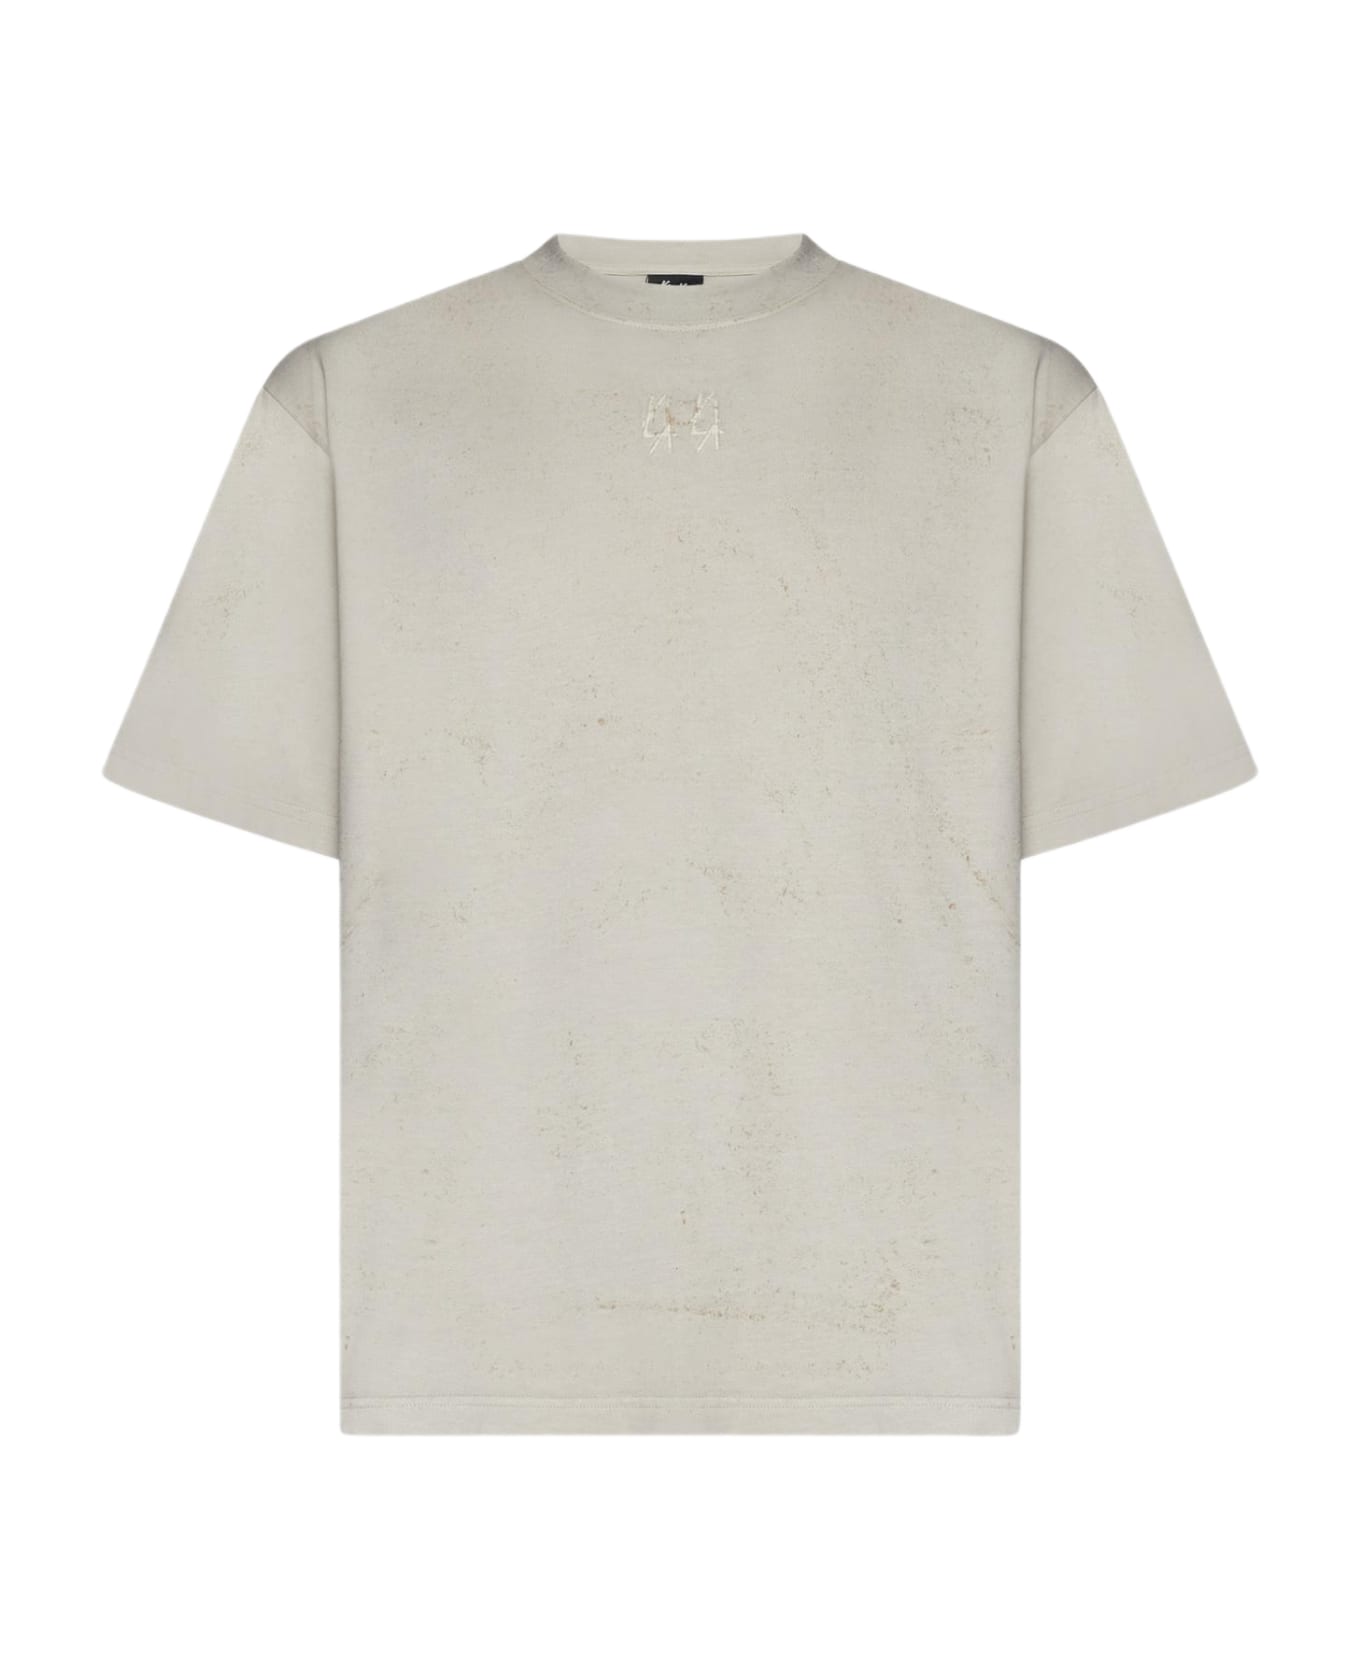 44 Label Group Back Holes Cotton T-shirt - White